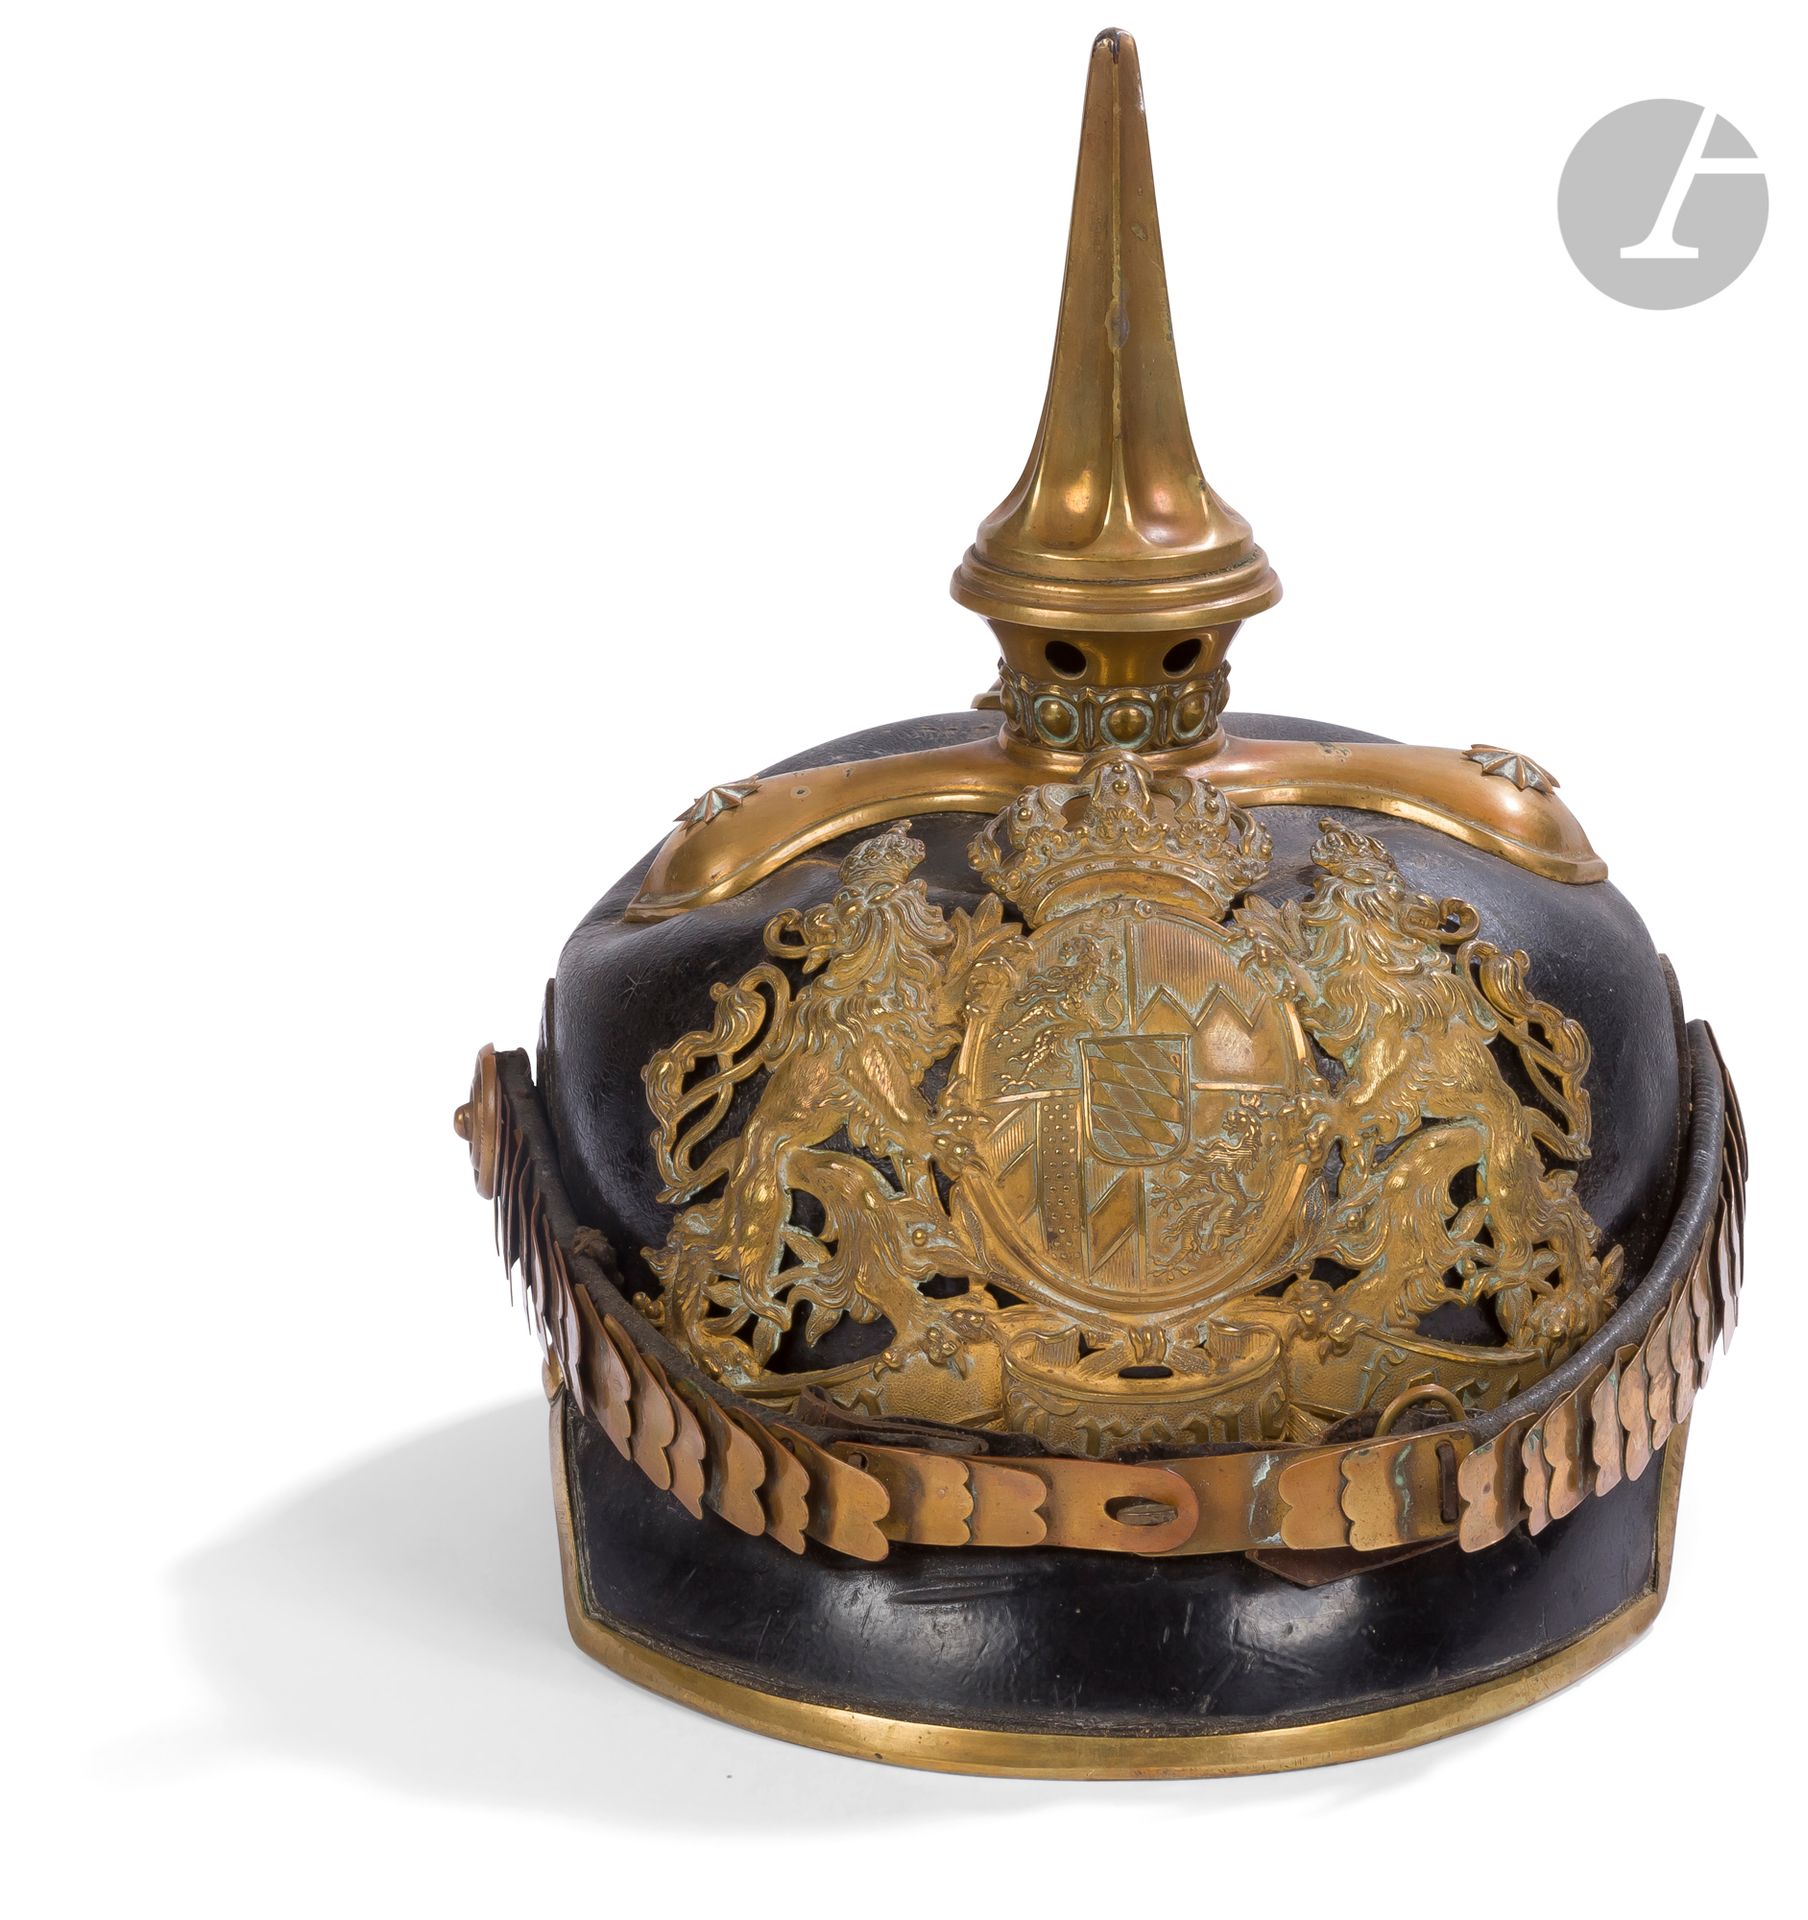 Null 巴伐利亚军官的头盔，型号为1895。
皮制头盔。镀金的黄铜配件。
按原样（缺少鸡冠花，一星的压花点，一个老板，头饰的底部，修饰物消失）。